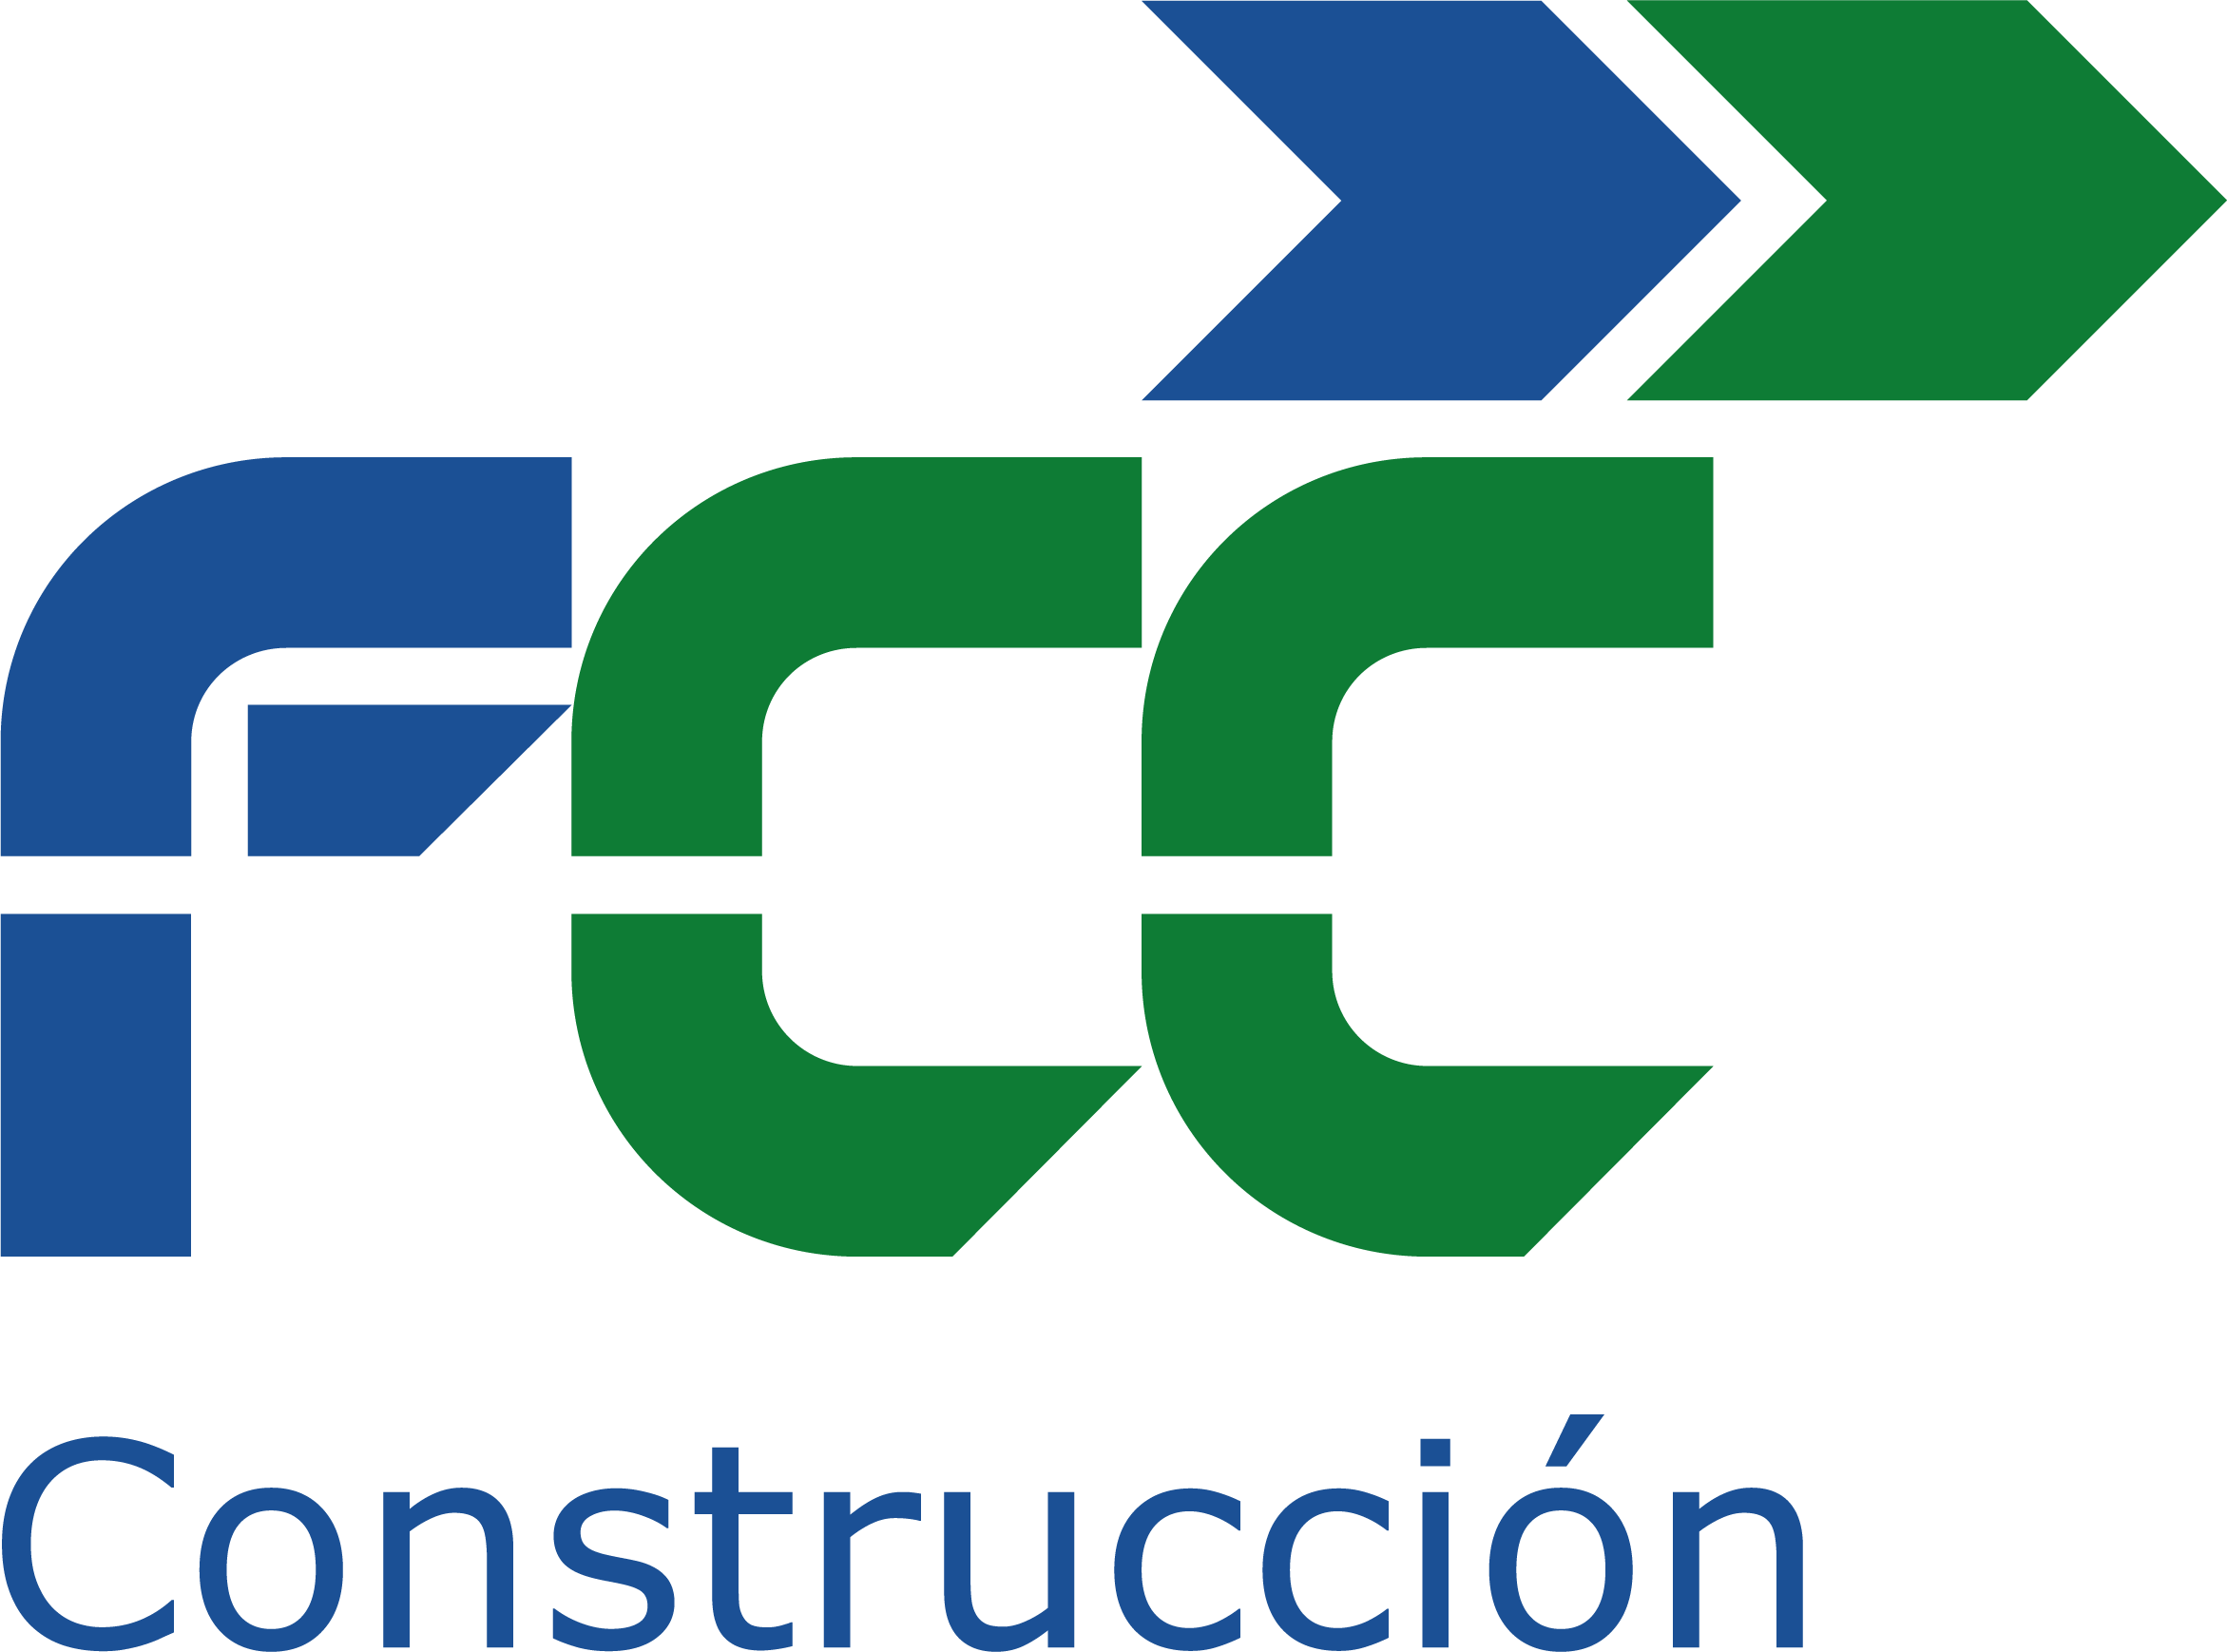 FCC Construccion Vert Cmyk